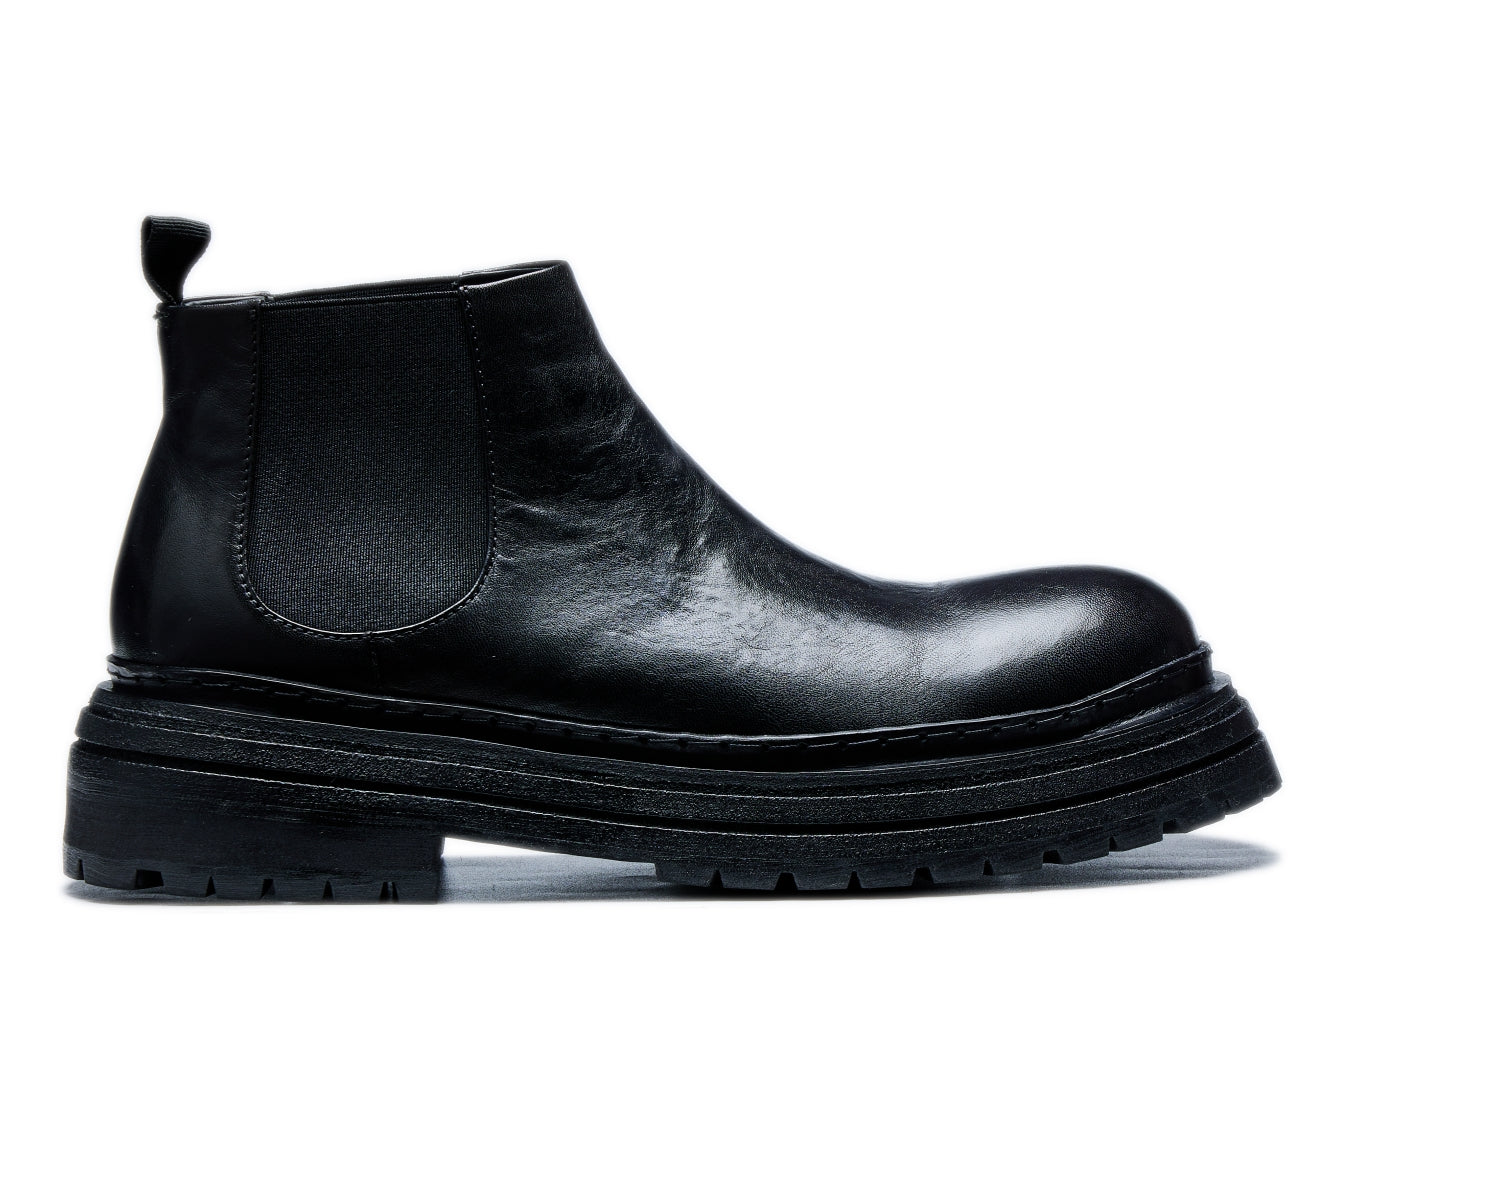 Men's Goodyear welt horsehide full-grain leather Chelsea boots in various styles12